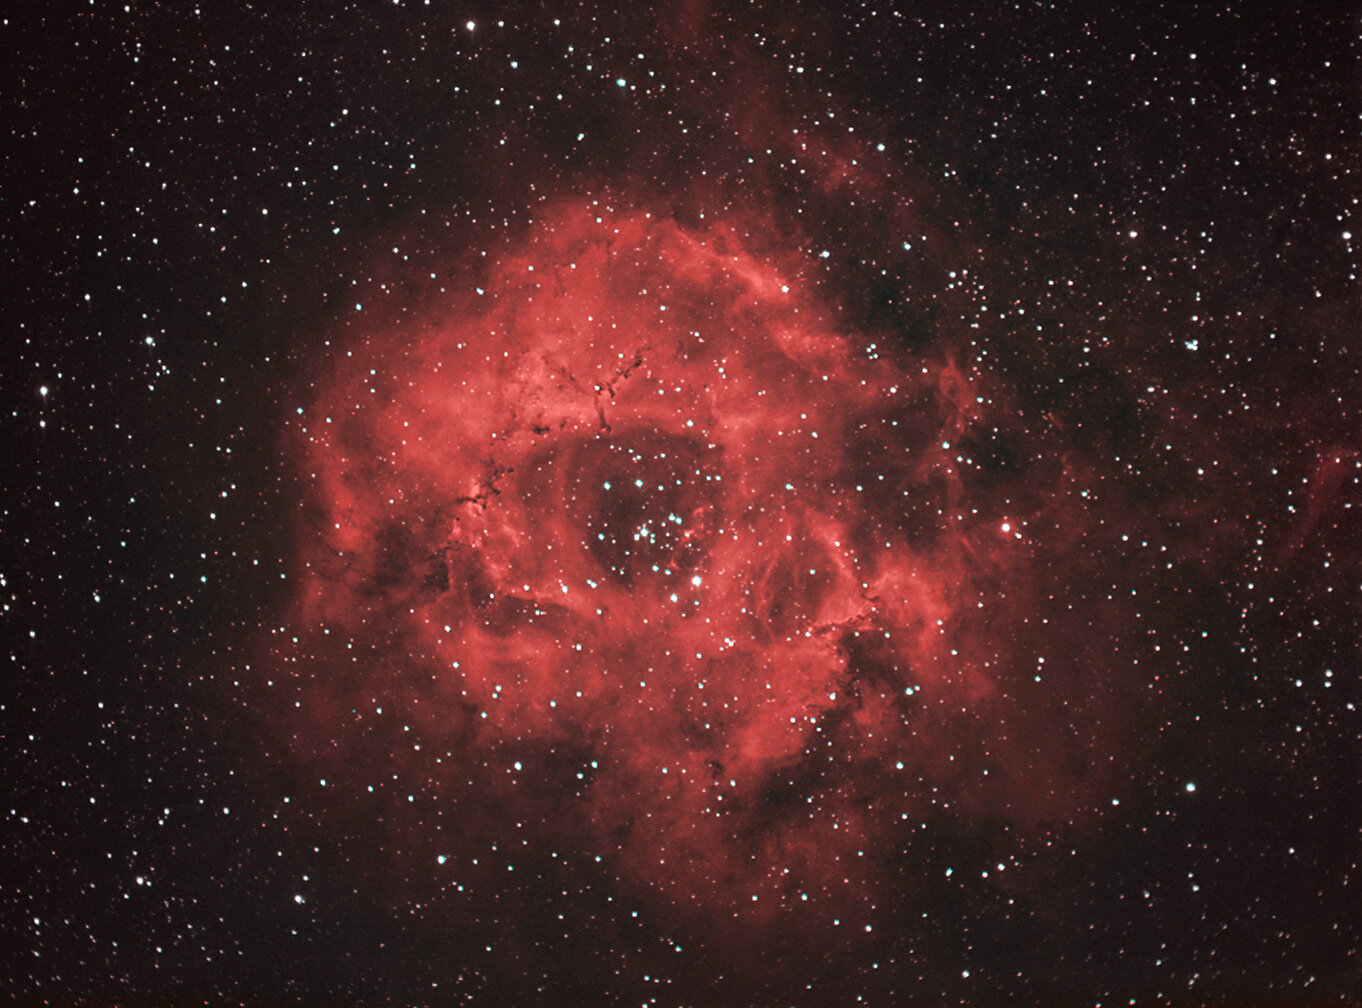 Rosette nebula. Reprocessed image